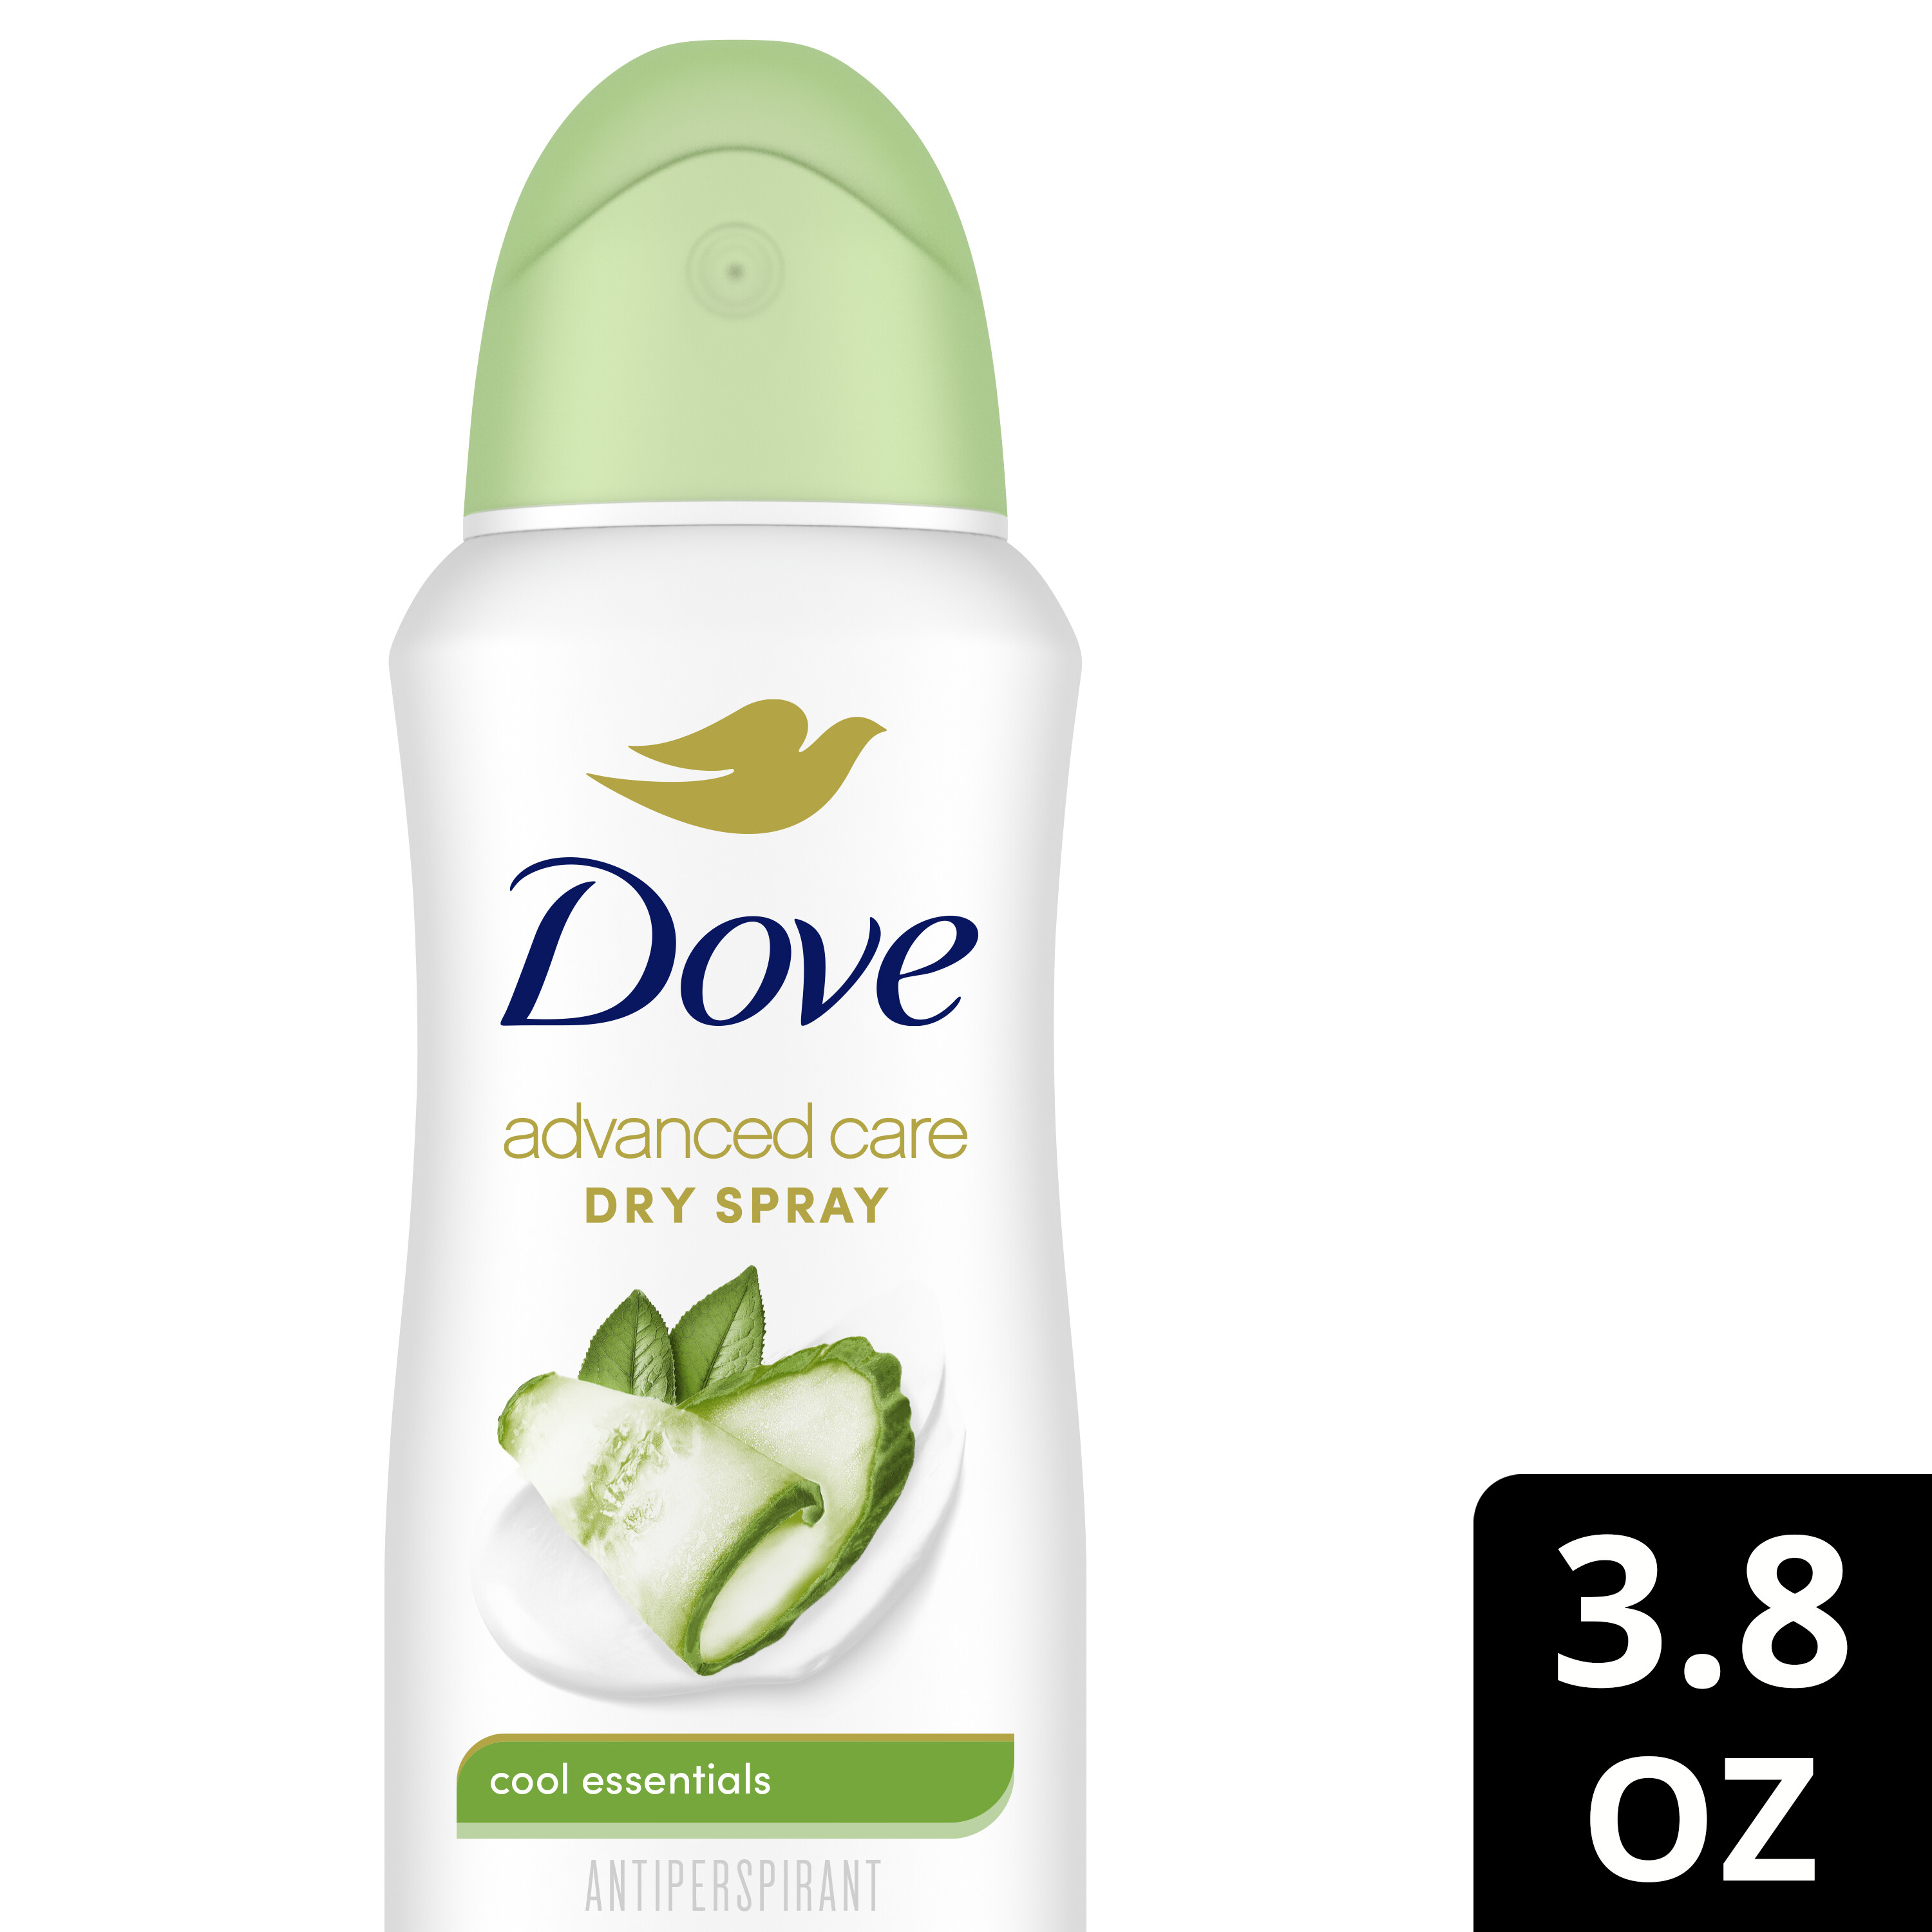 Dove Advanced Care Long Lasting Women's Antiperspirant Deodorant Dry Spray, Cool Essentials, 3.8 oz - image 3 of 11